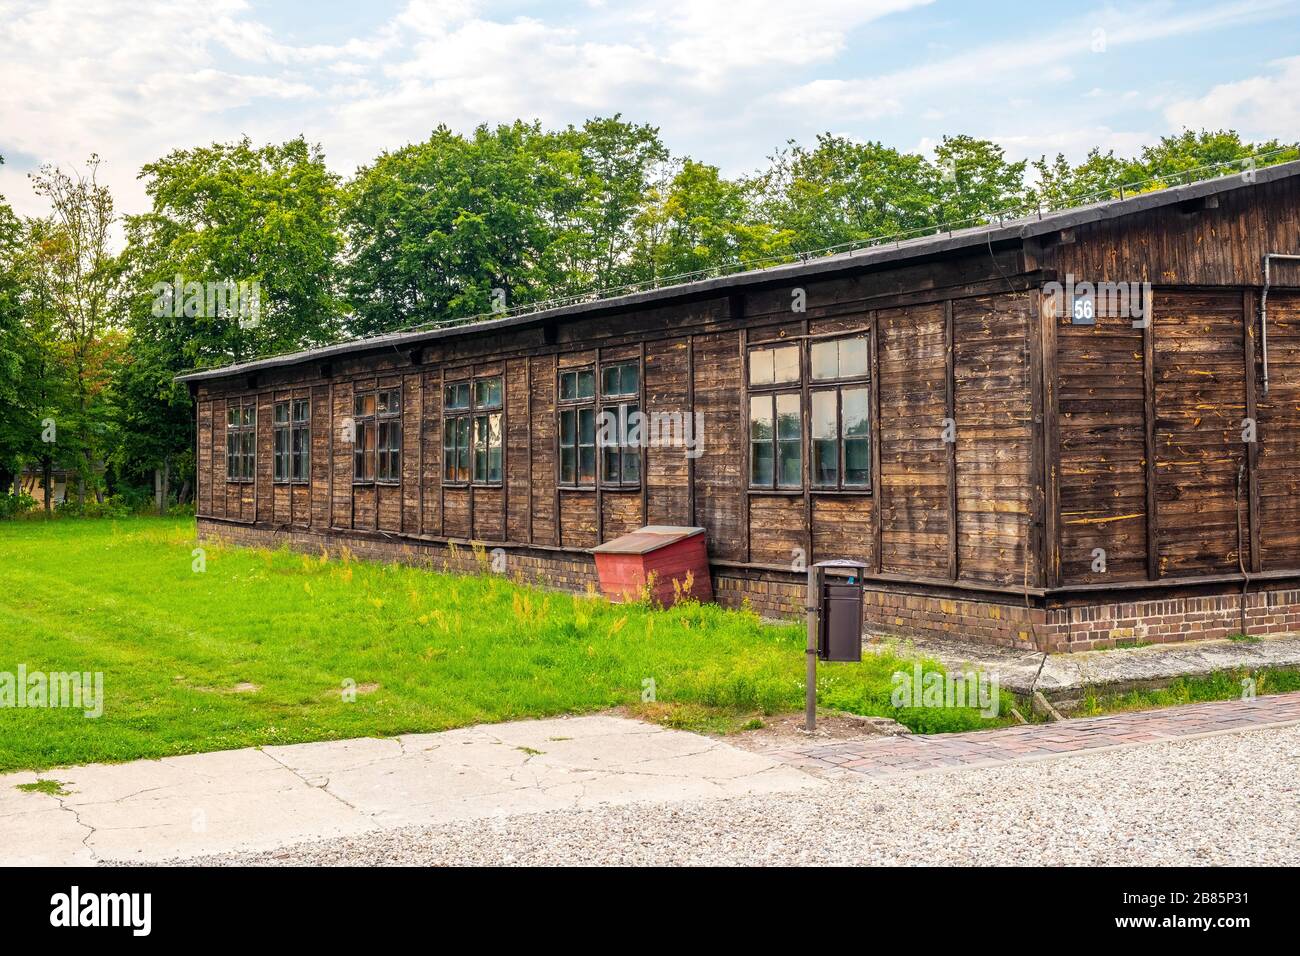 Lublin, Lubelskie/Polen - 2019/08/17: Kasernen und Zäune des Konzentrationslagers Majdanek KL Lublin - Konzentrationslager Lublin Stockfoto